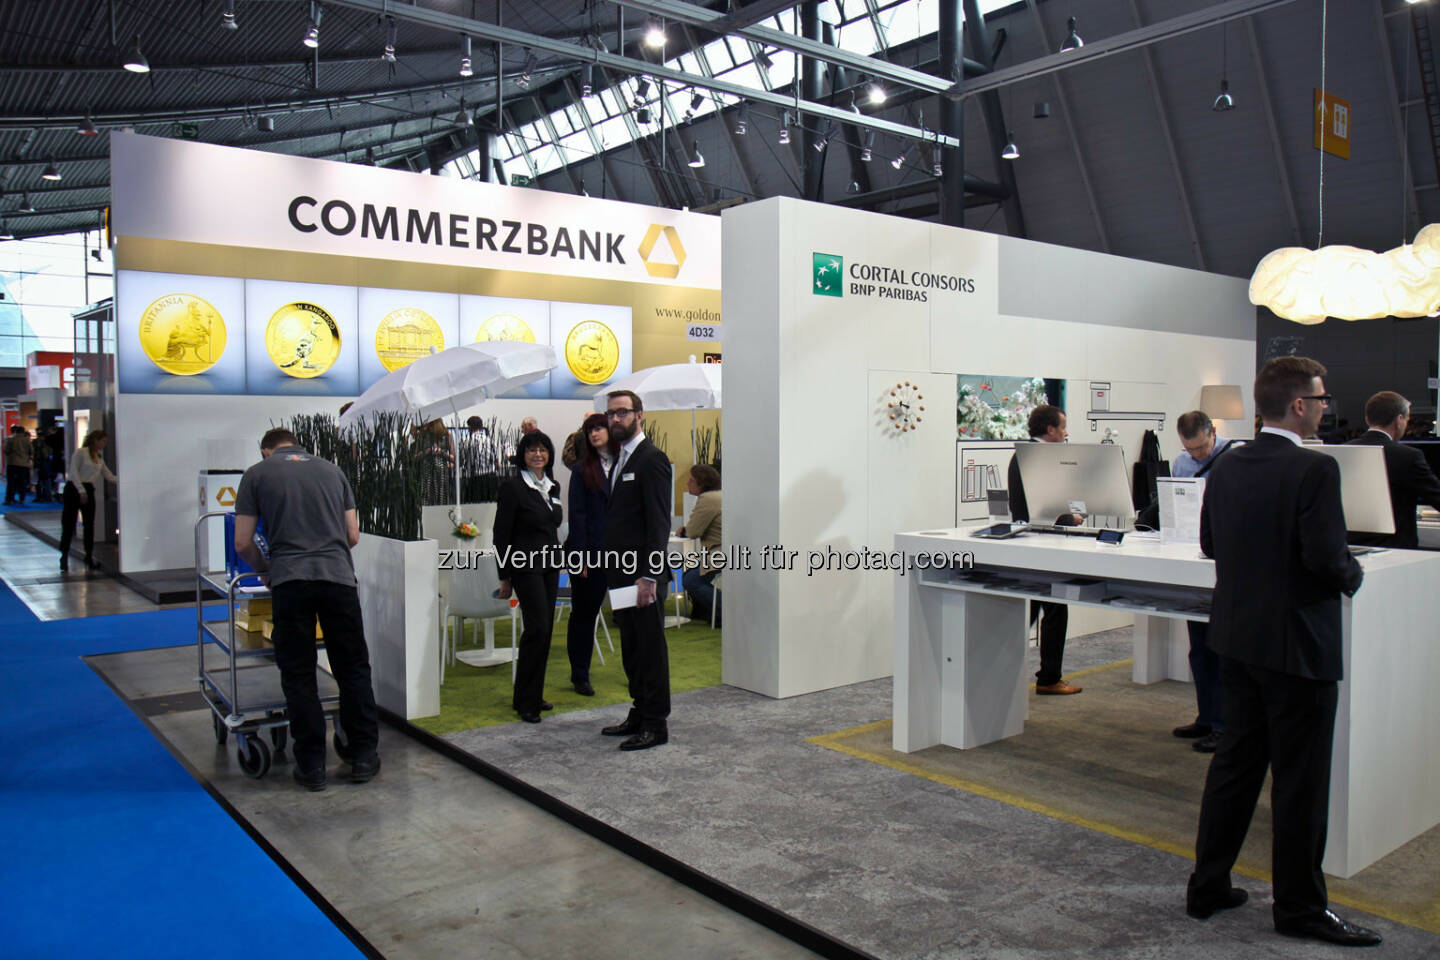 Commerzbank, Cortal Consors